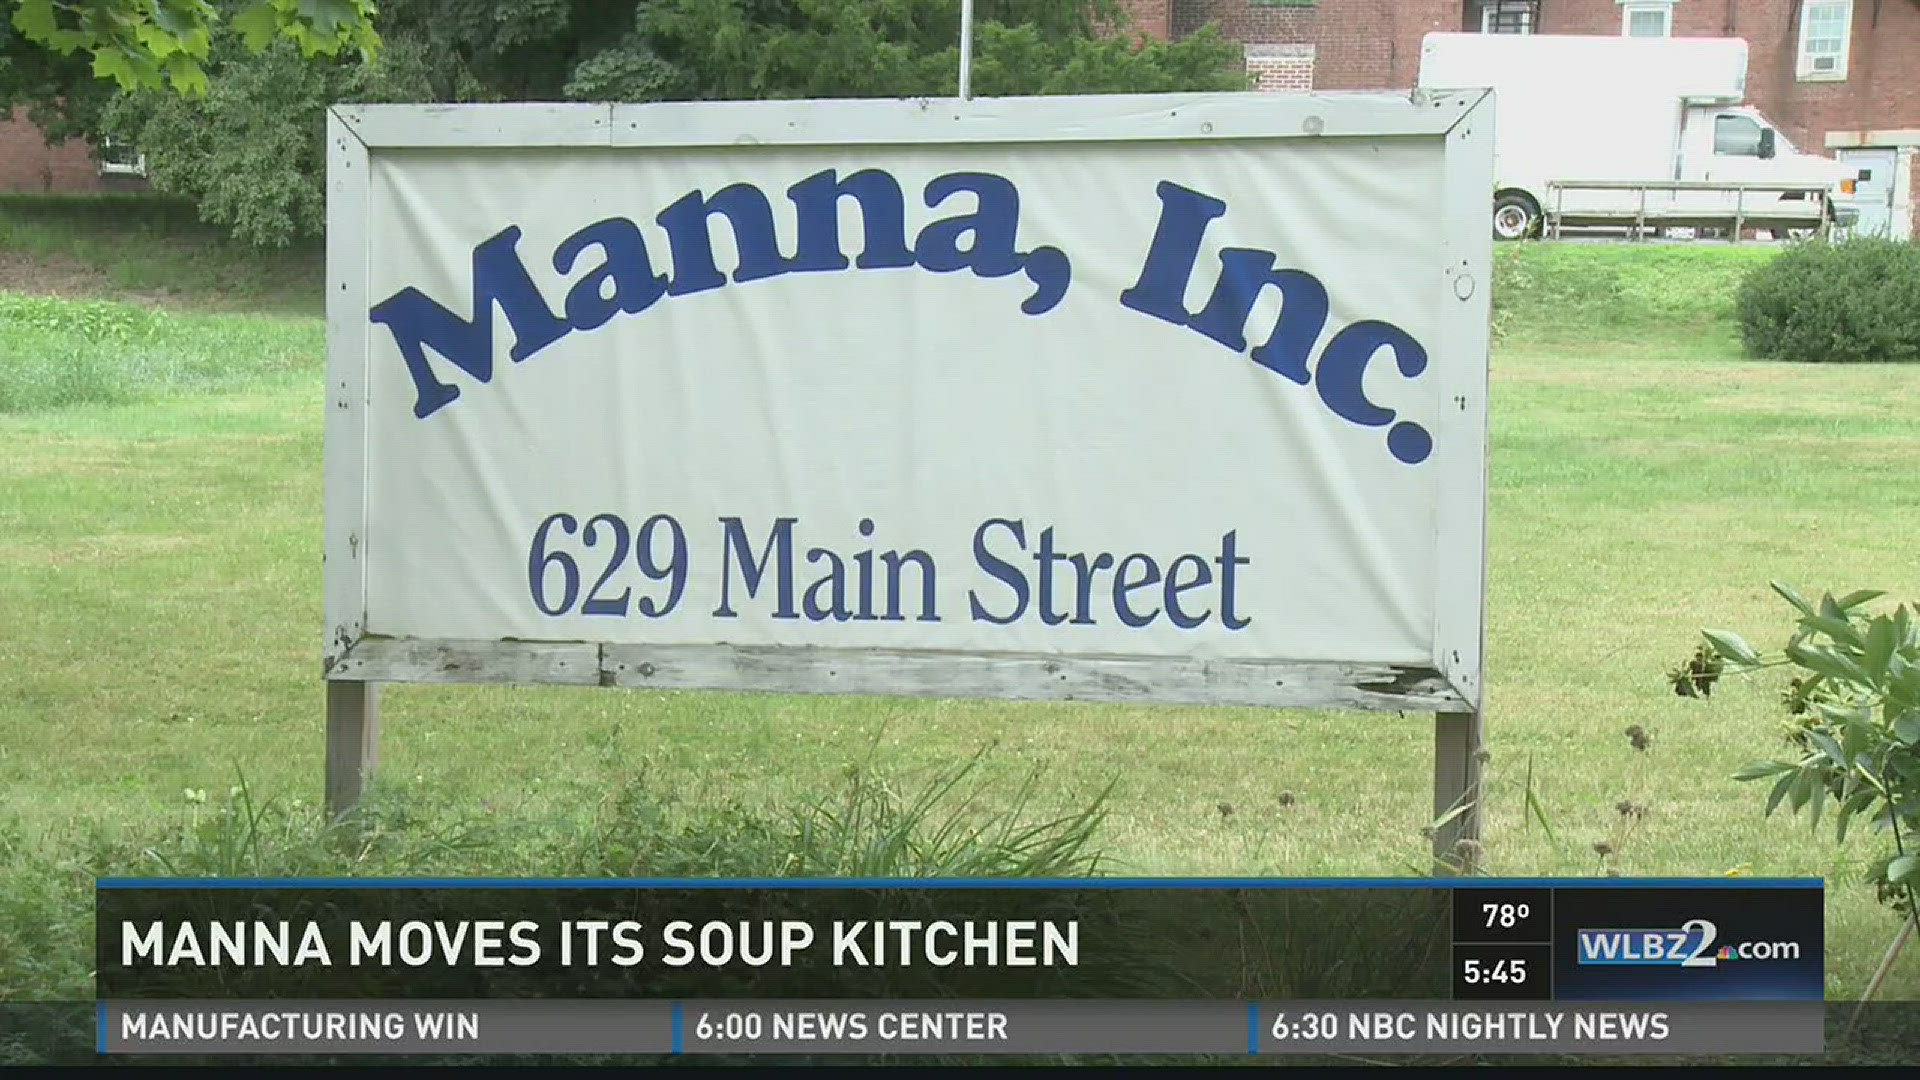 Manna moves its soup kitchen